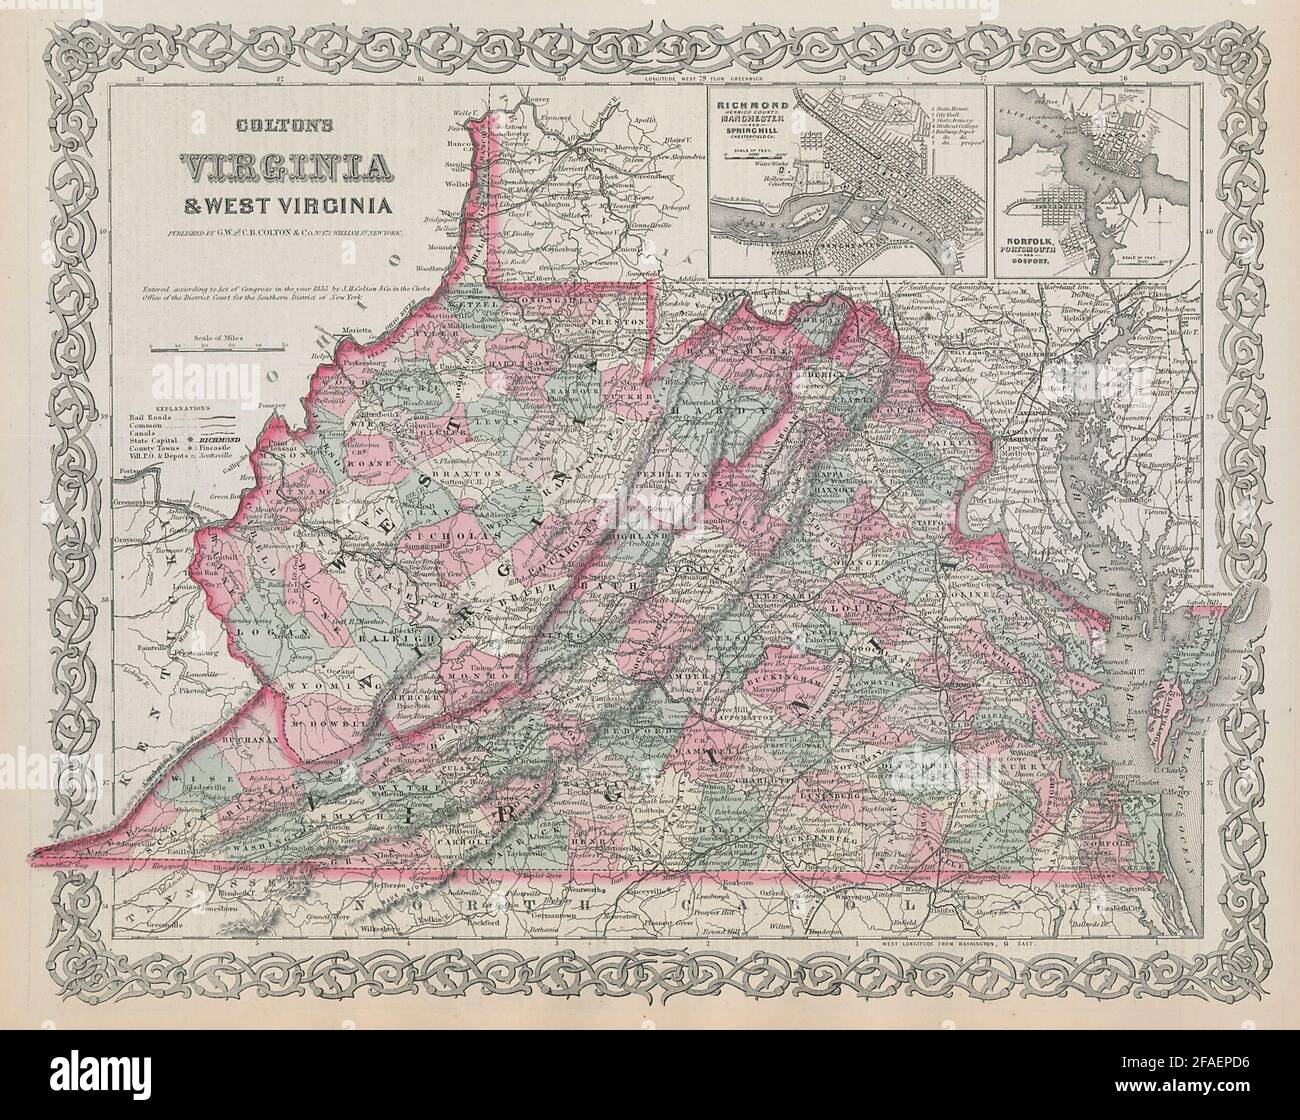 Colton's Virginia & West Virginia. Antique state map. Richmond Norfolk 1869 Stock Photo